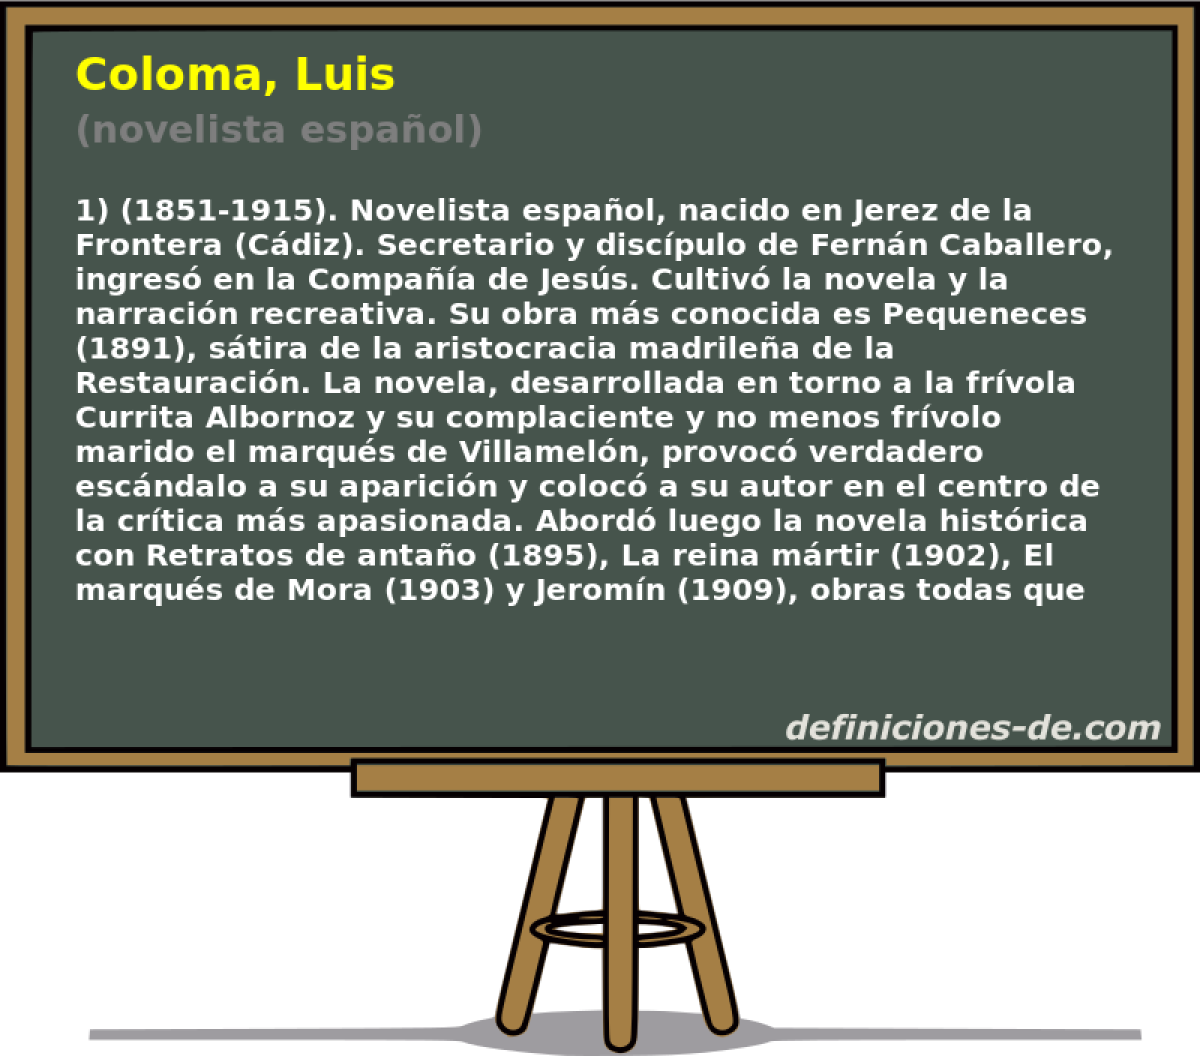 Coloma, Luis (novelista espaol)